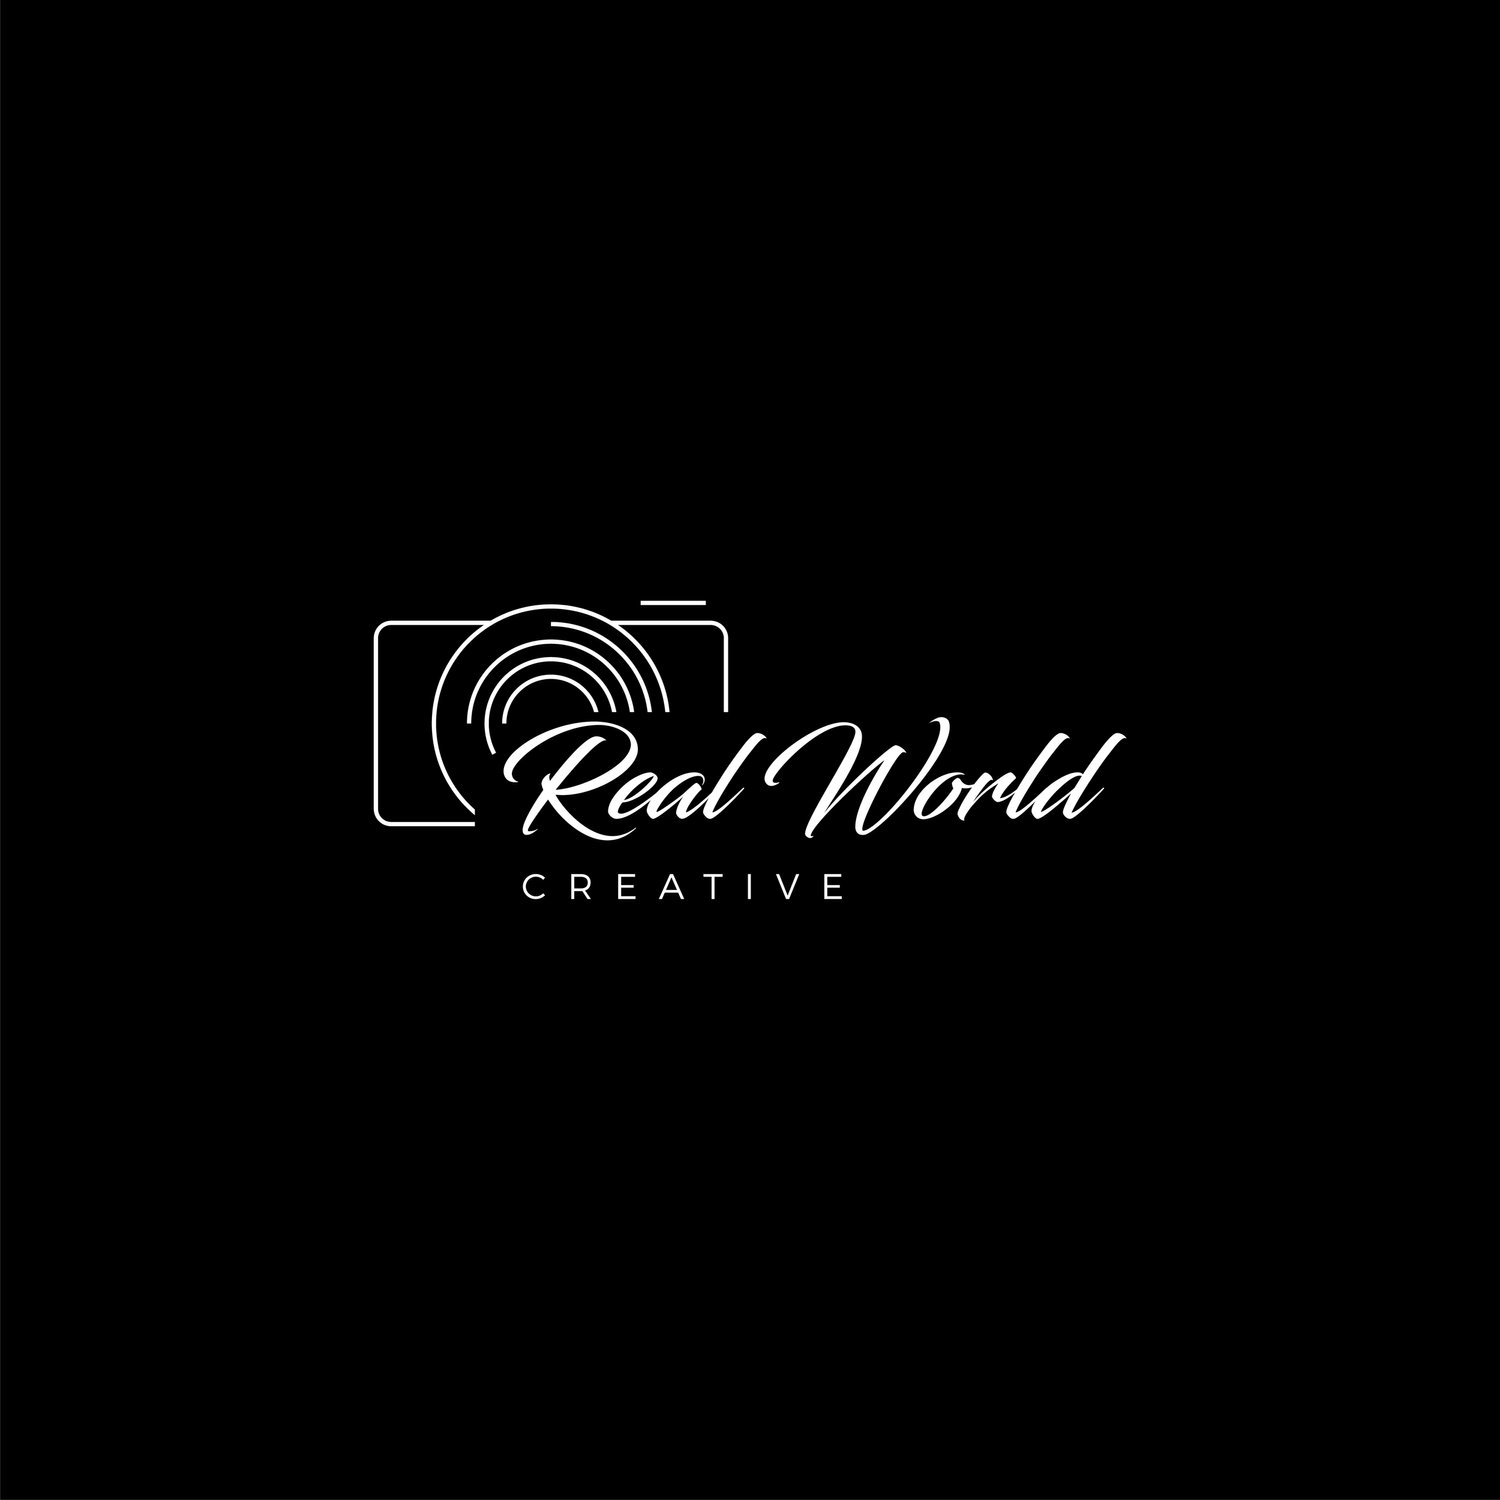 Real World Creative